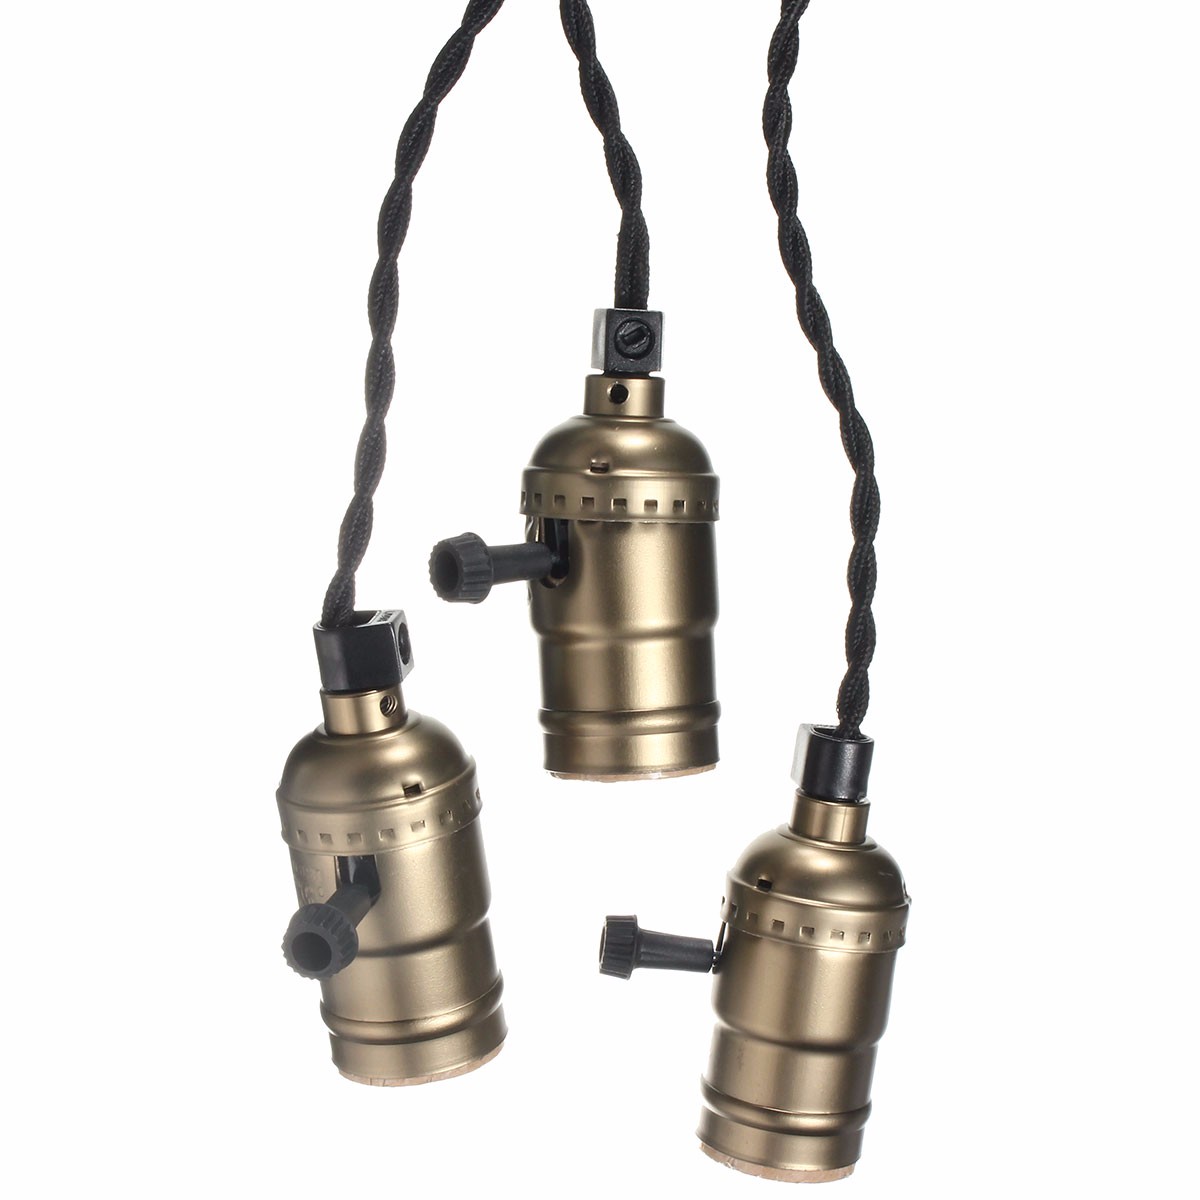 E26E27-Solid-Industrial-Triple-Lamp-Sockets-Vintage-Edison-Hanging-Pendant-Lamp-Holder-1894192-5